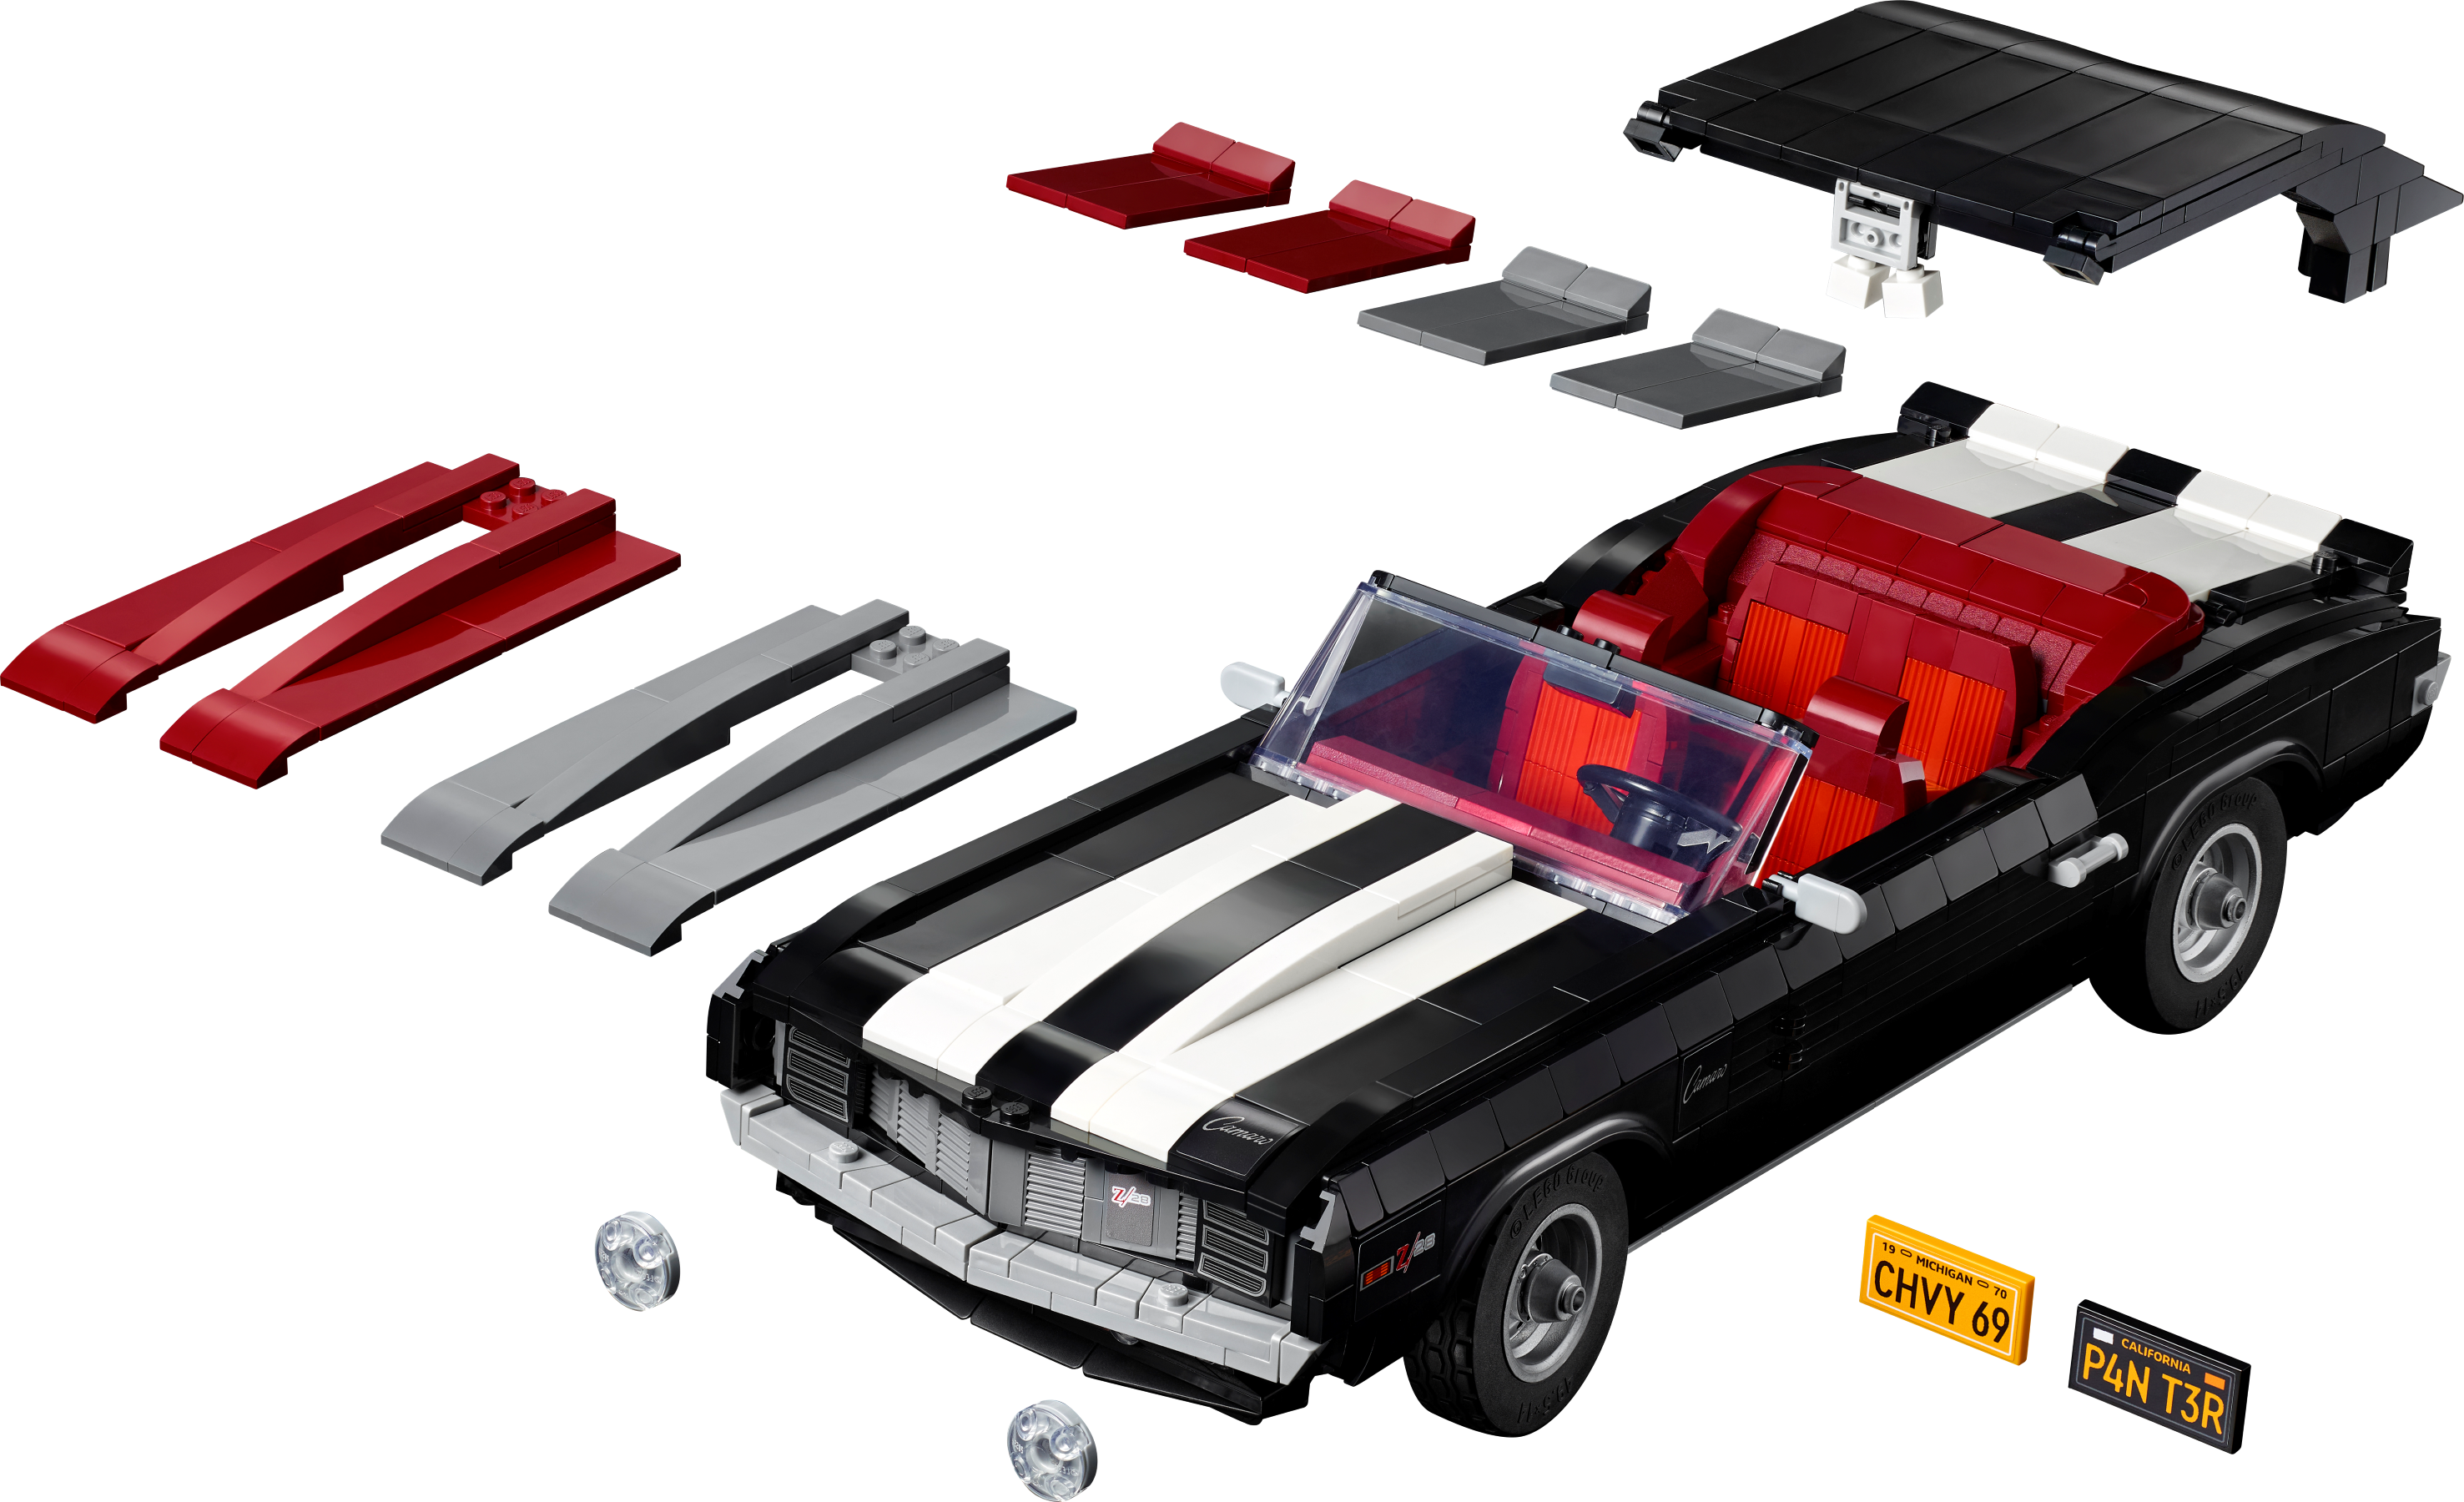 Chevrolet Camaro Z28 10304 | LEGO® Icons | Buy online at the 